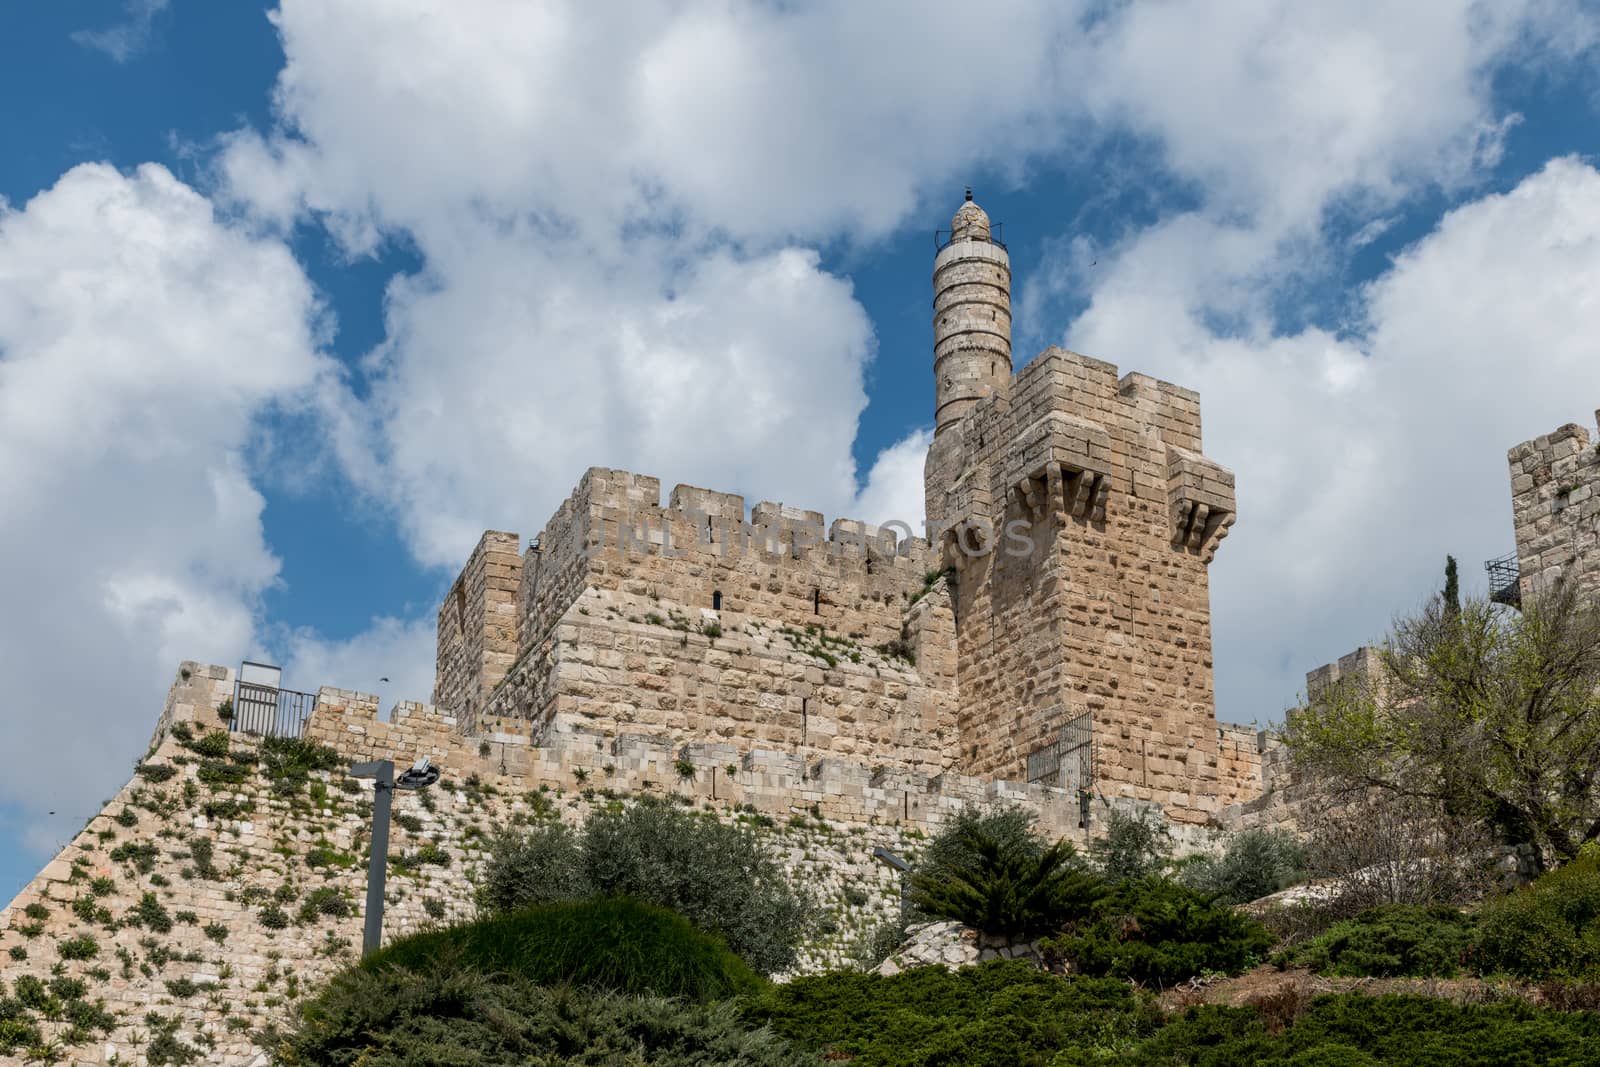 ower of David in the old city of Jerusalem, Israel